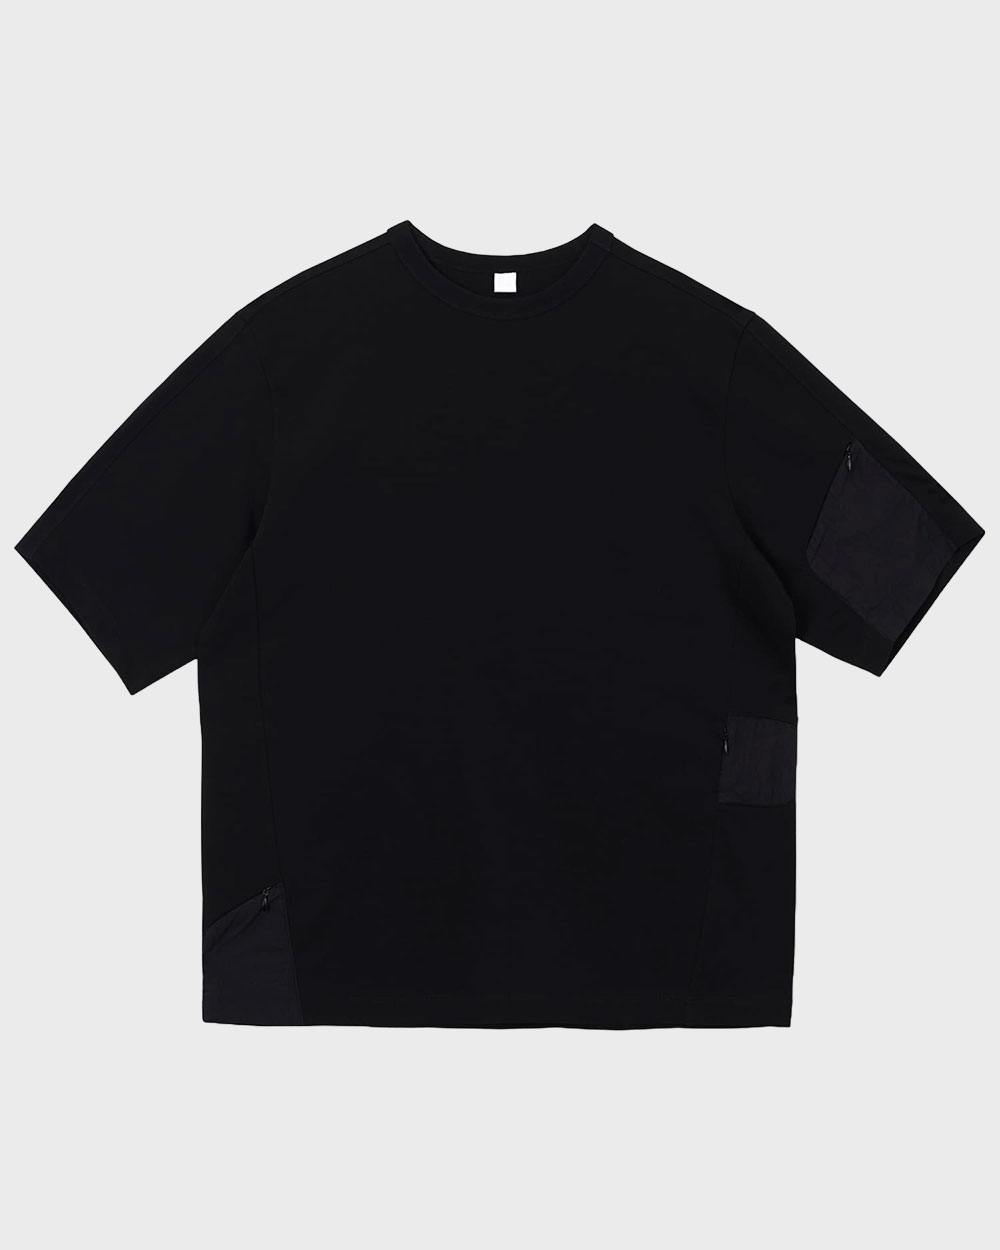 Pocket T-Shirts (Black)